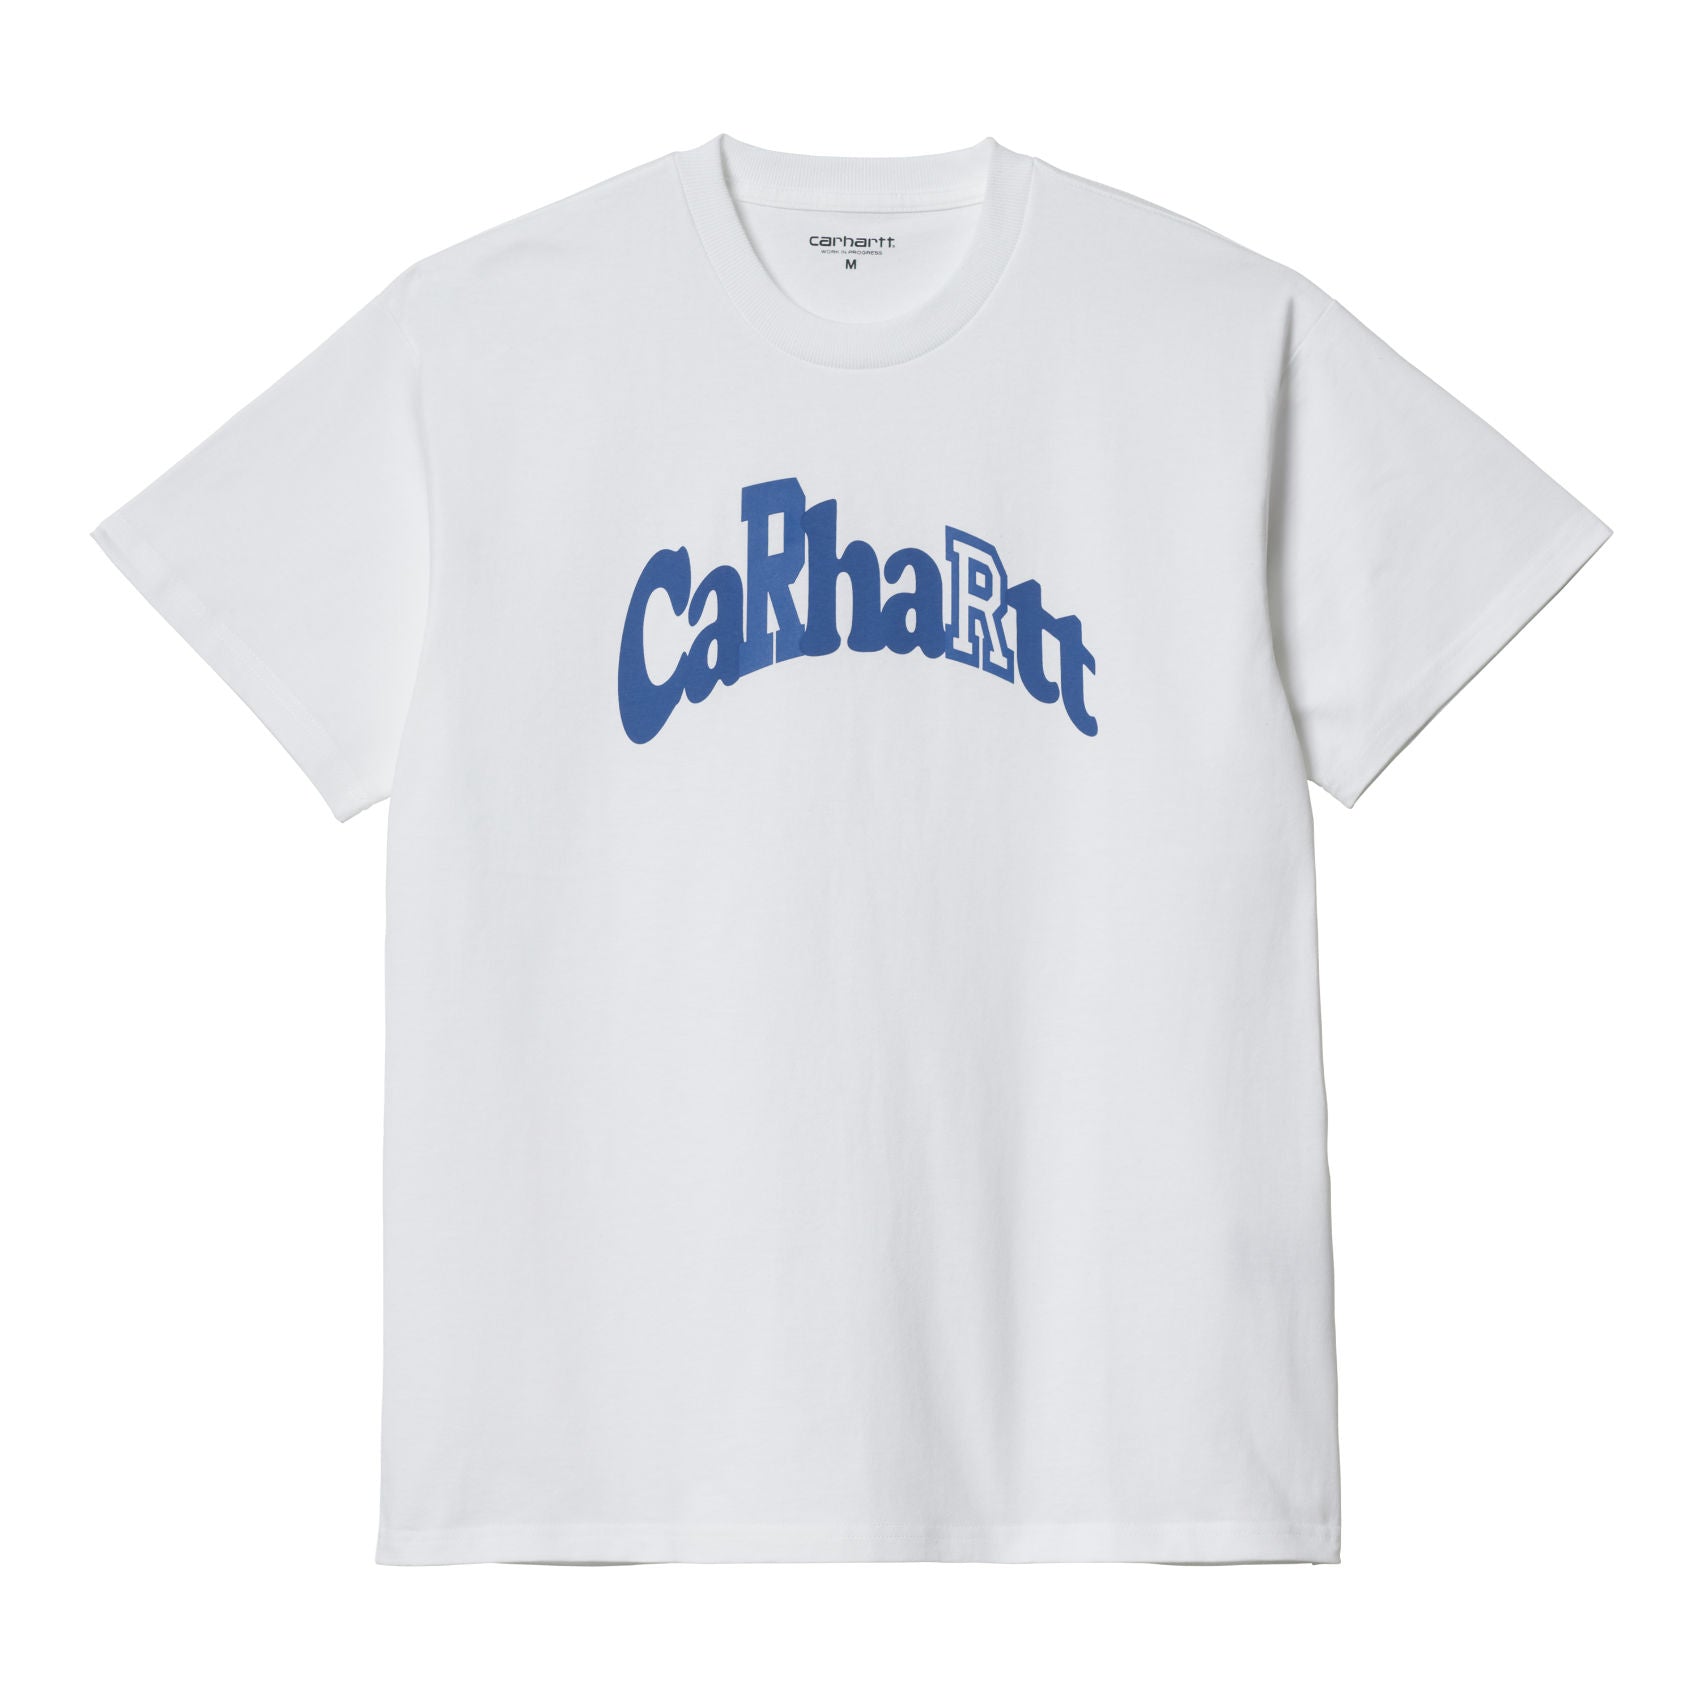 Carhartt WIP Amherst T-Shirt White/Gulf. Foto de frente.